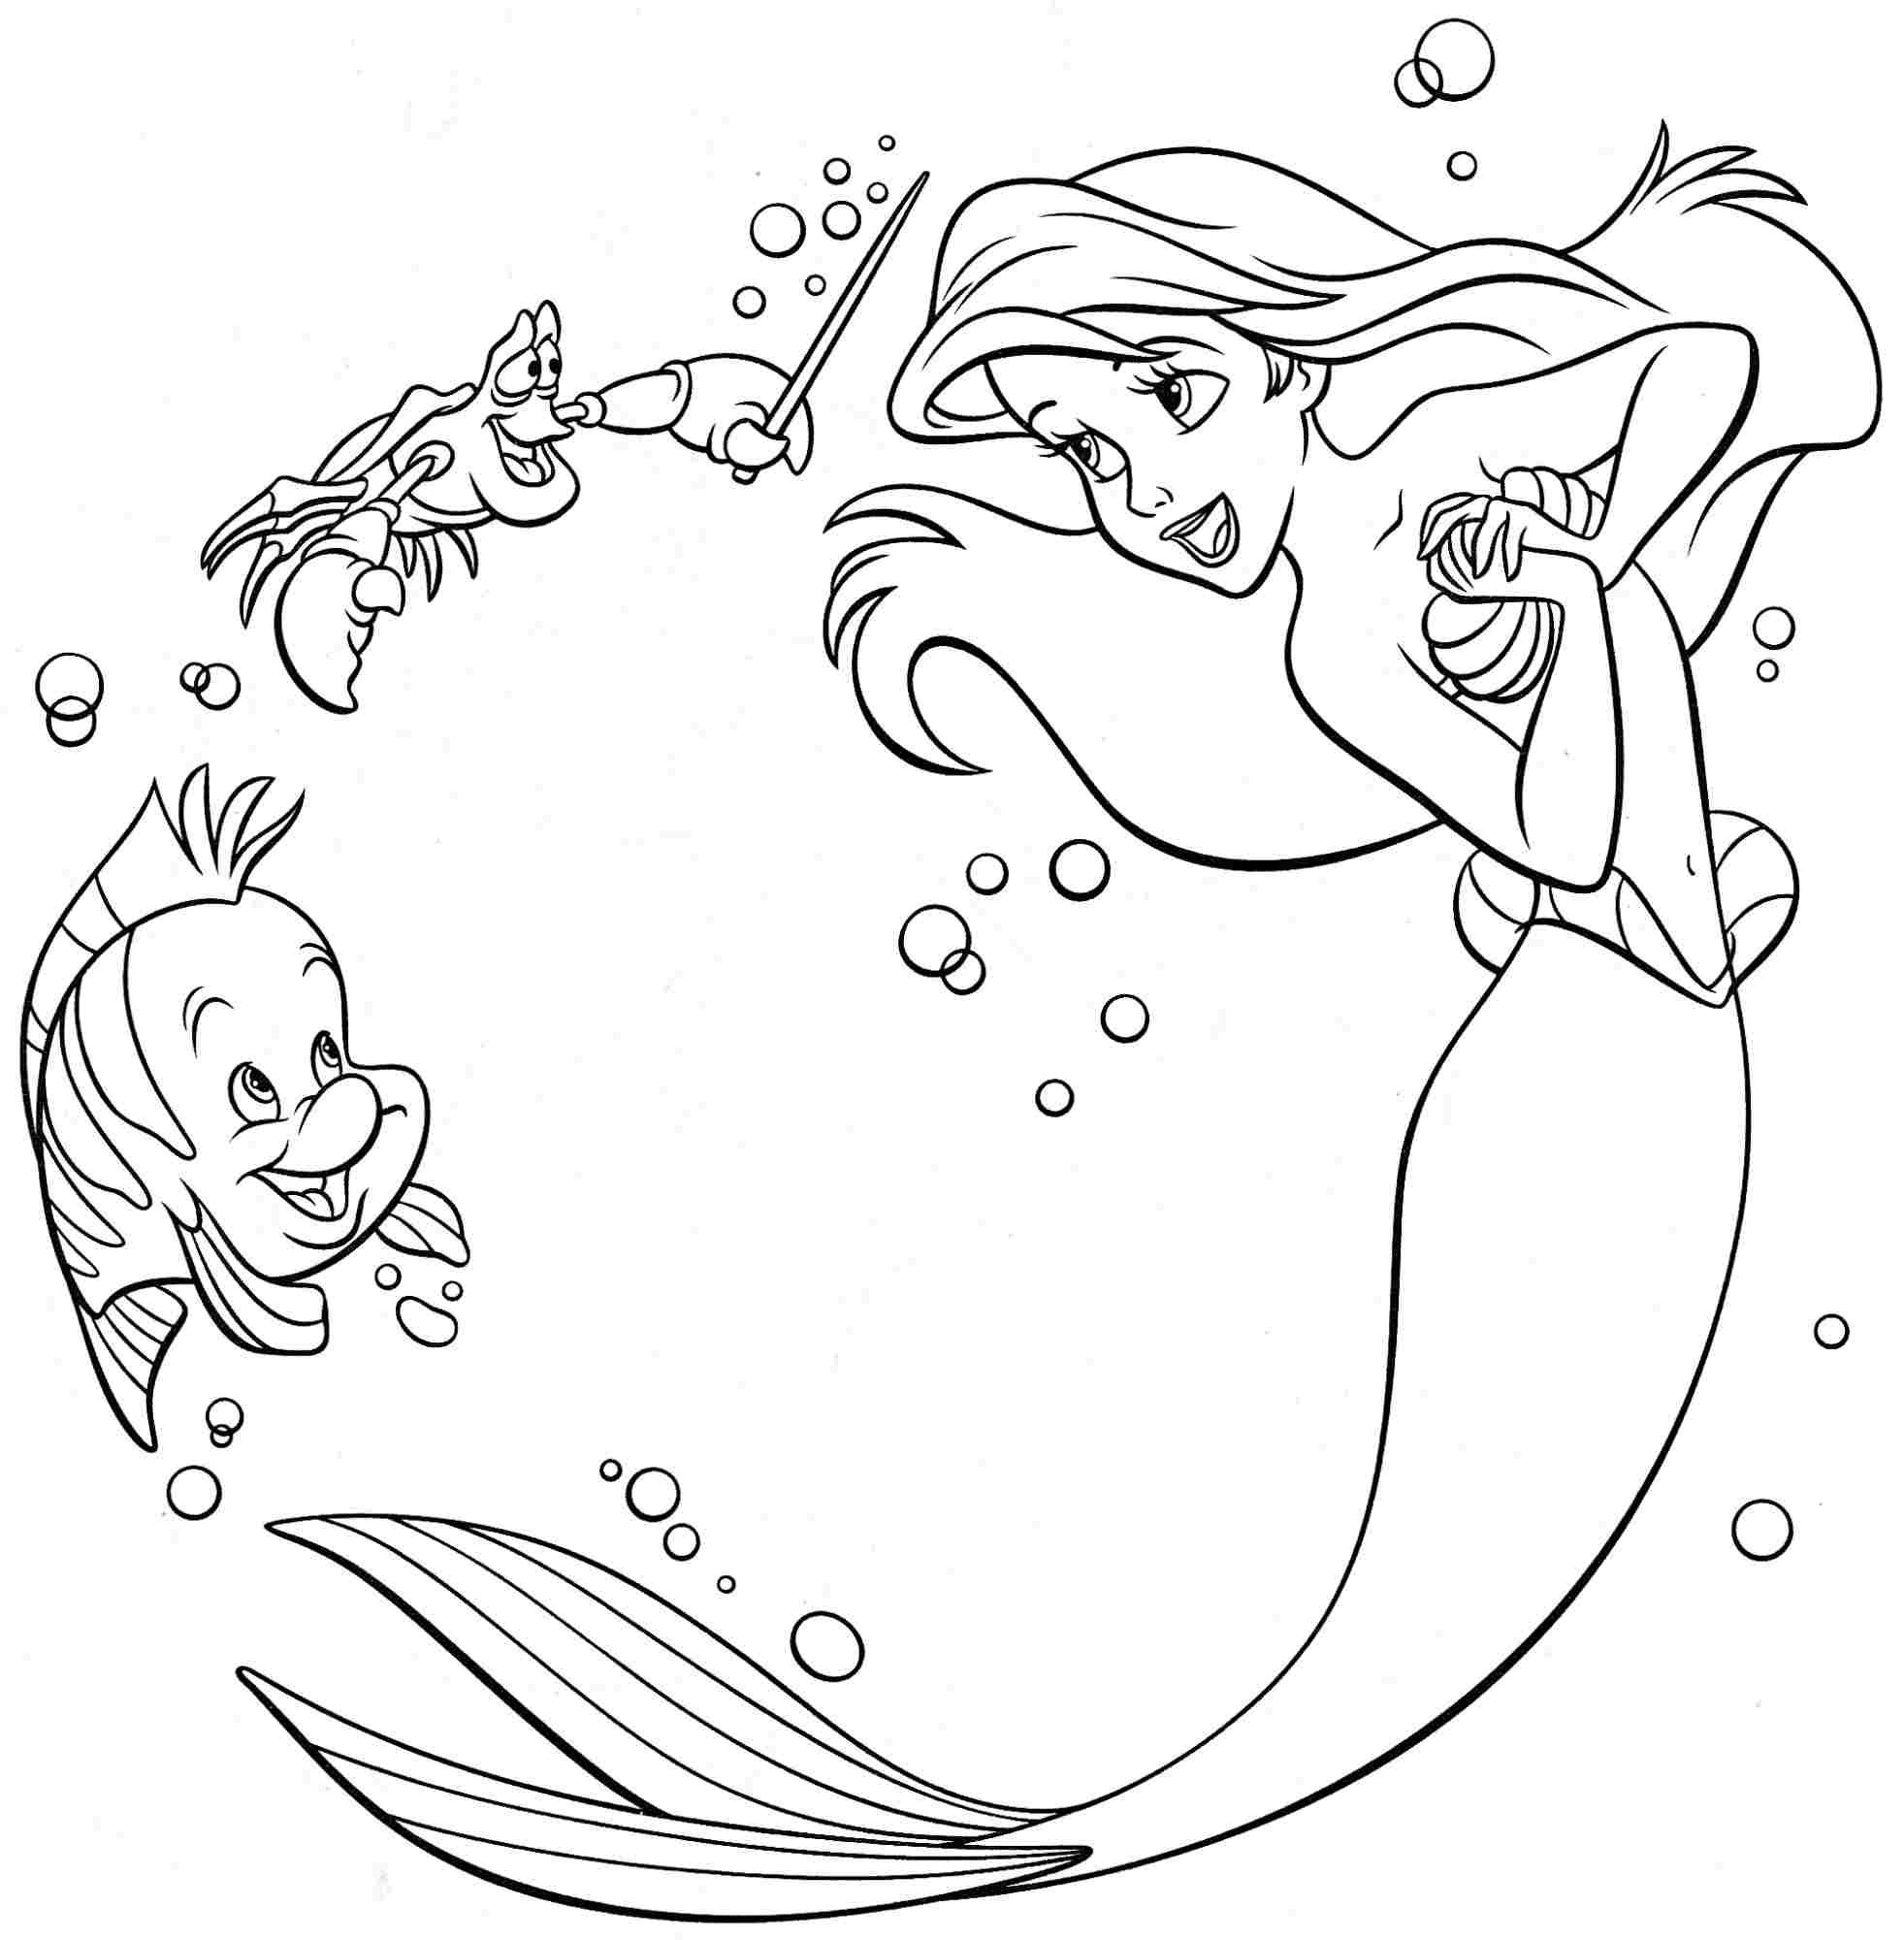 Circle of Mermaid and Flounder from Mermaid